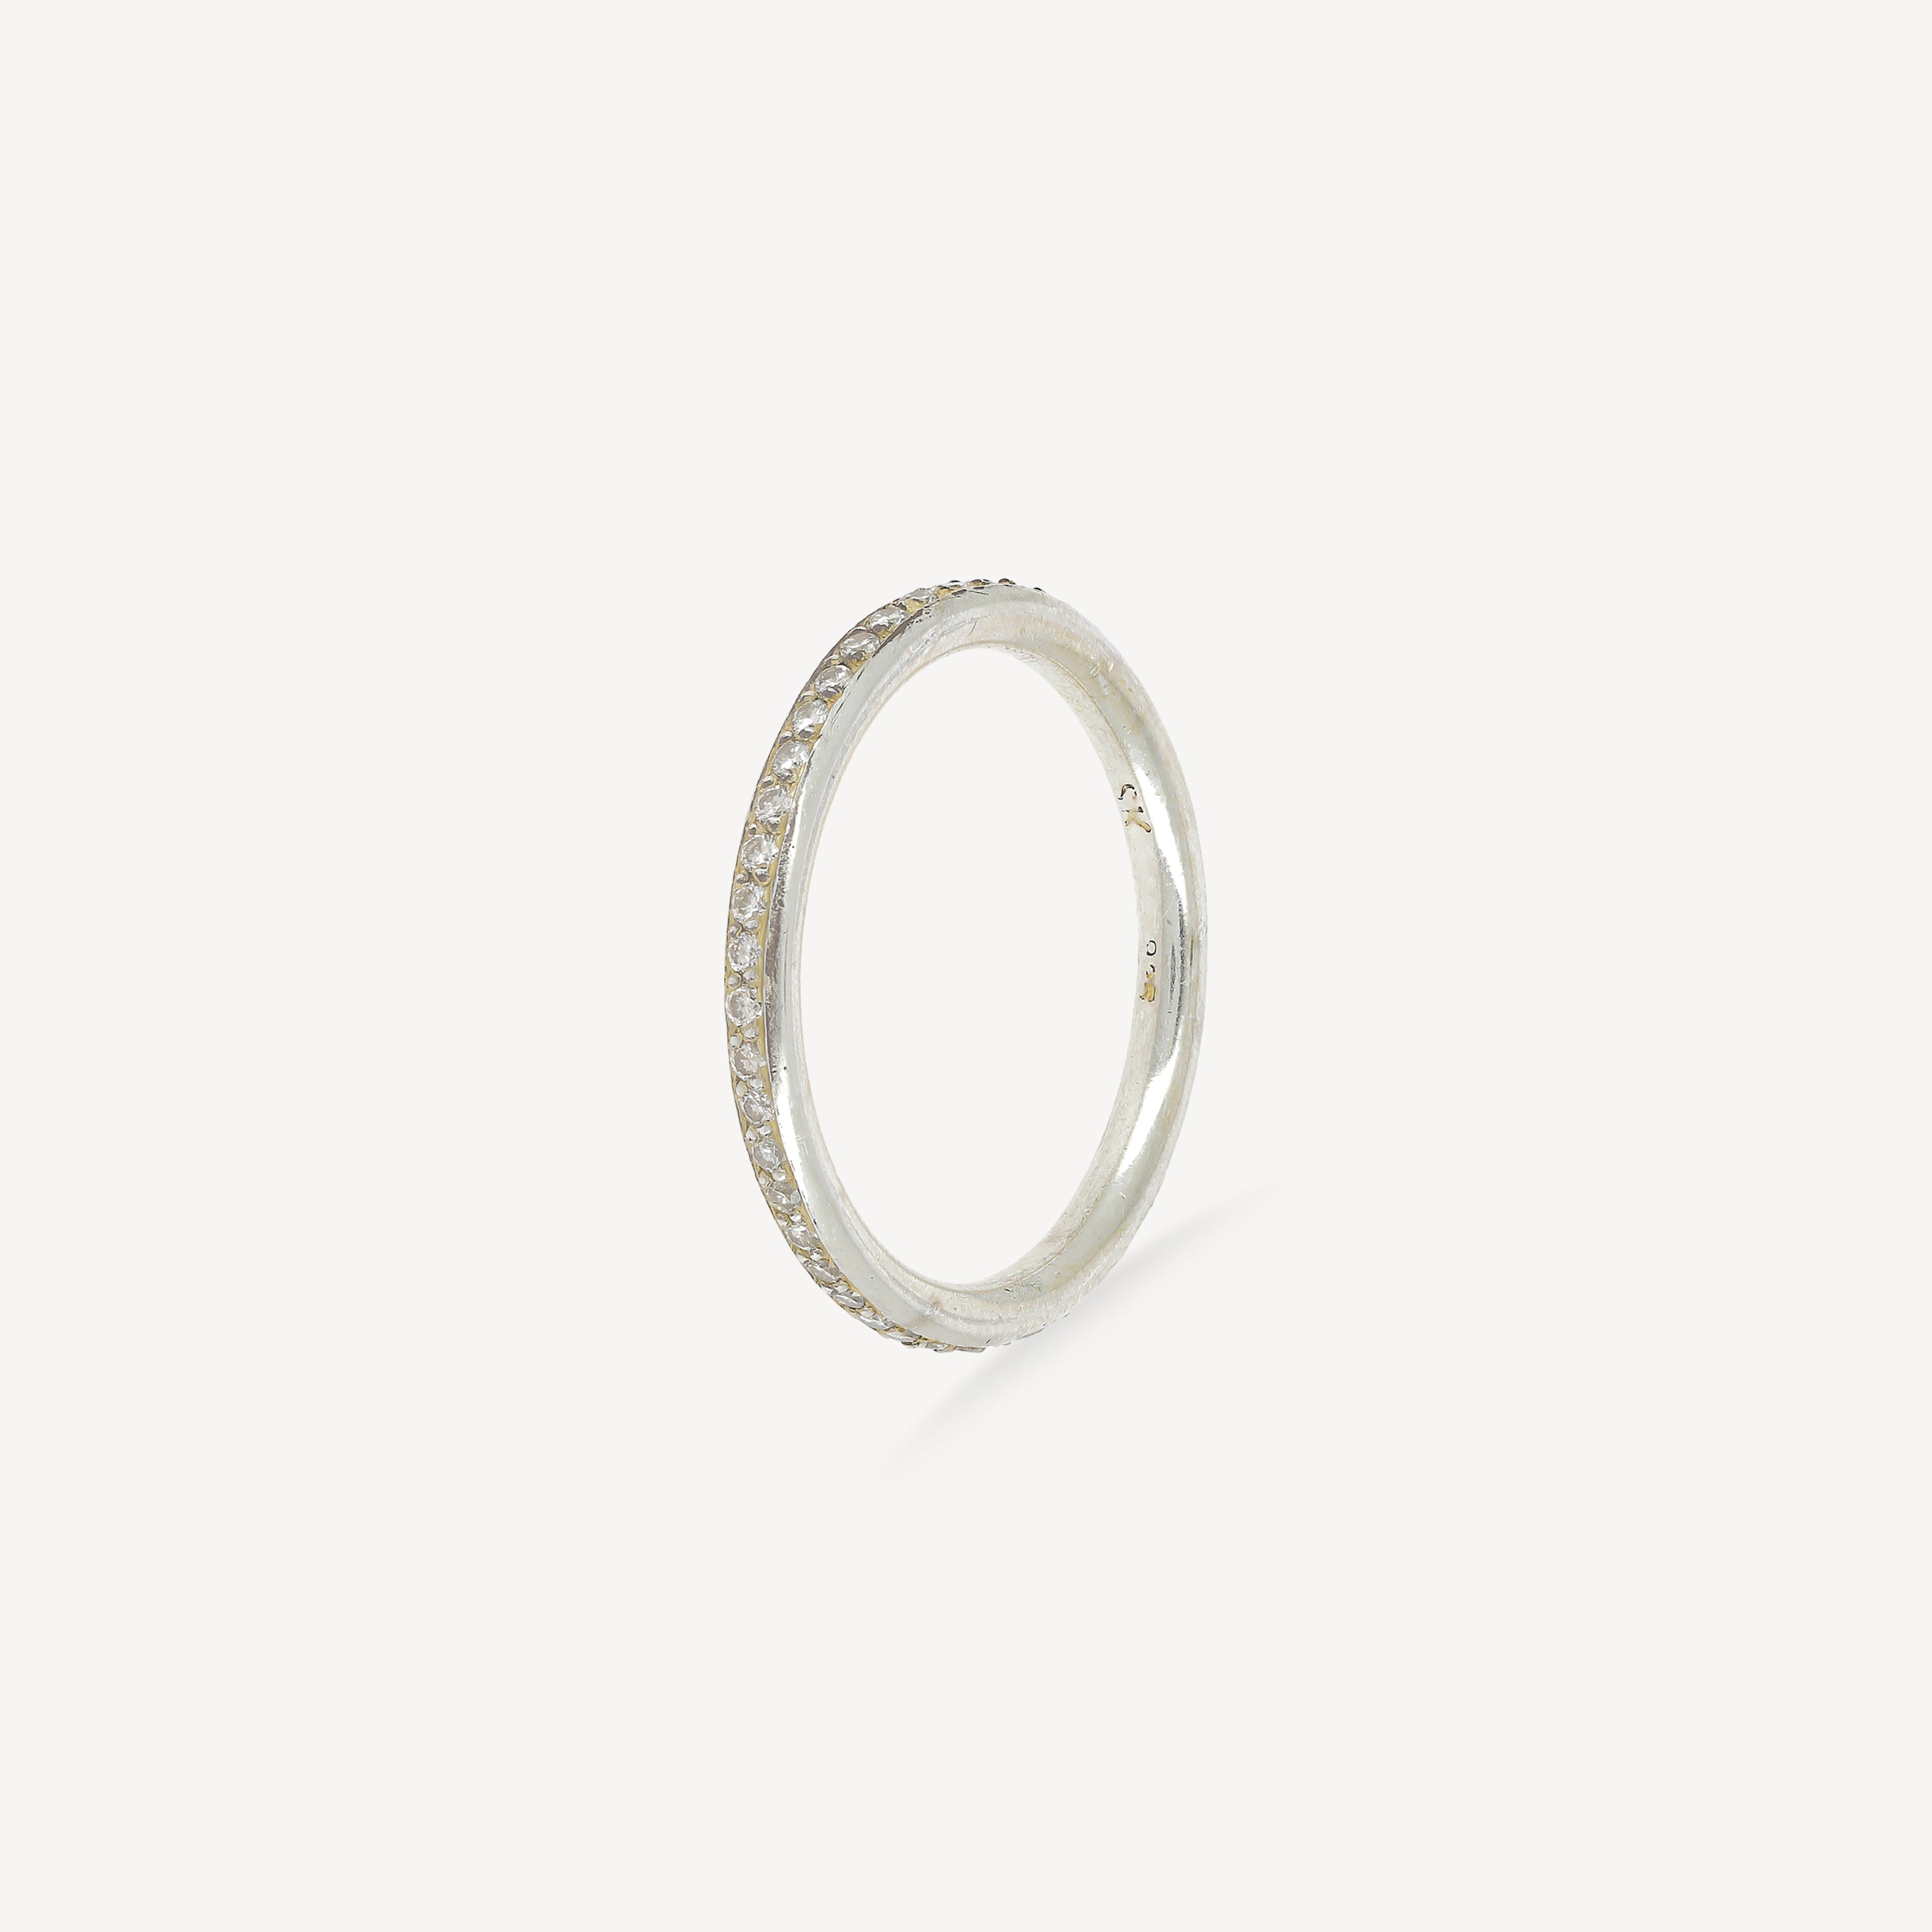 Spinelli Kilcollin Silver and Diamond Ring